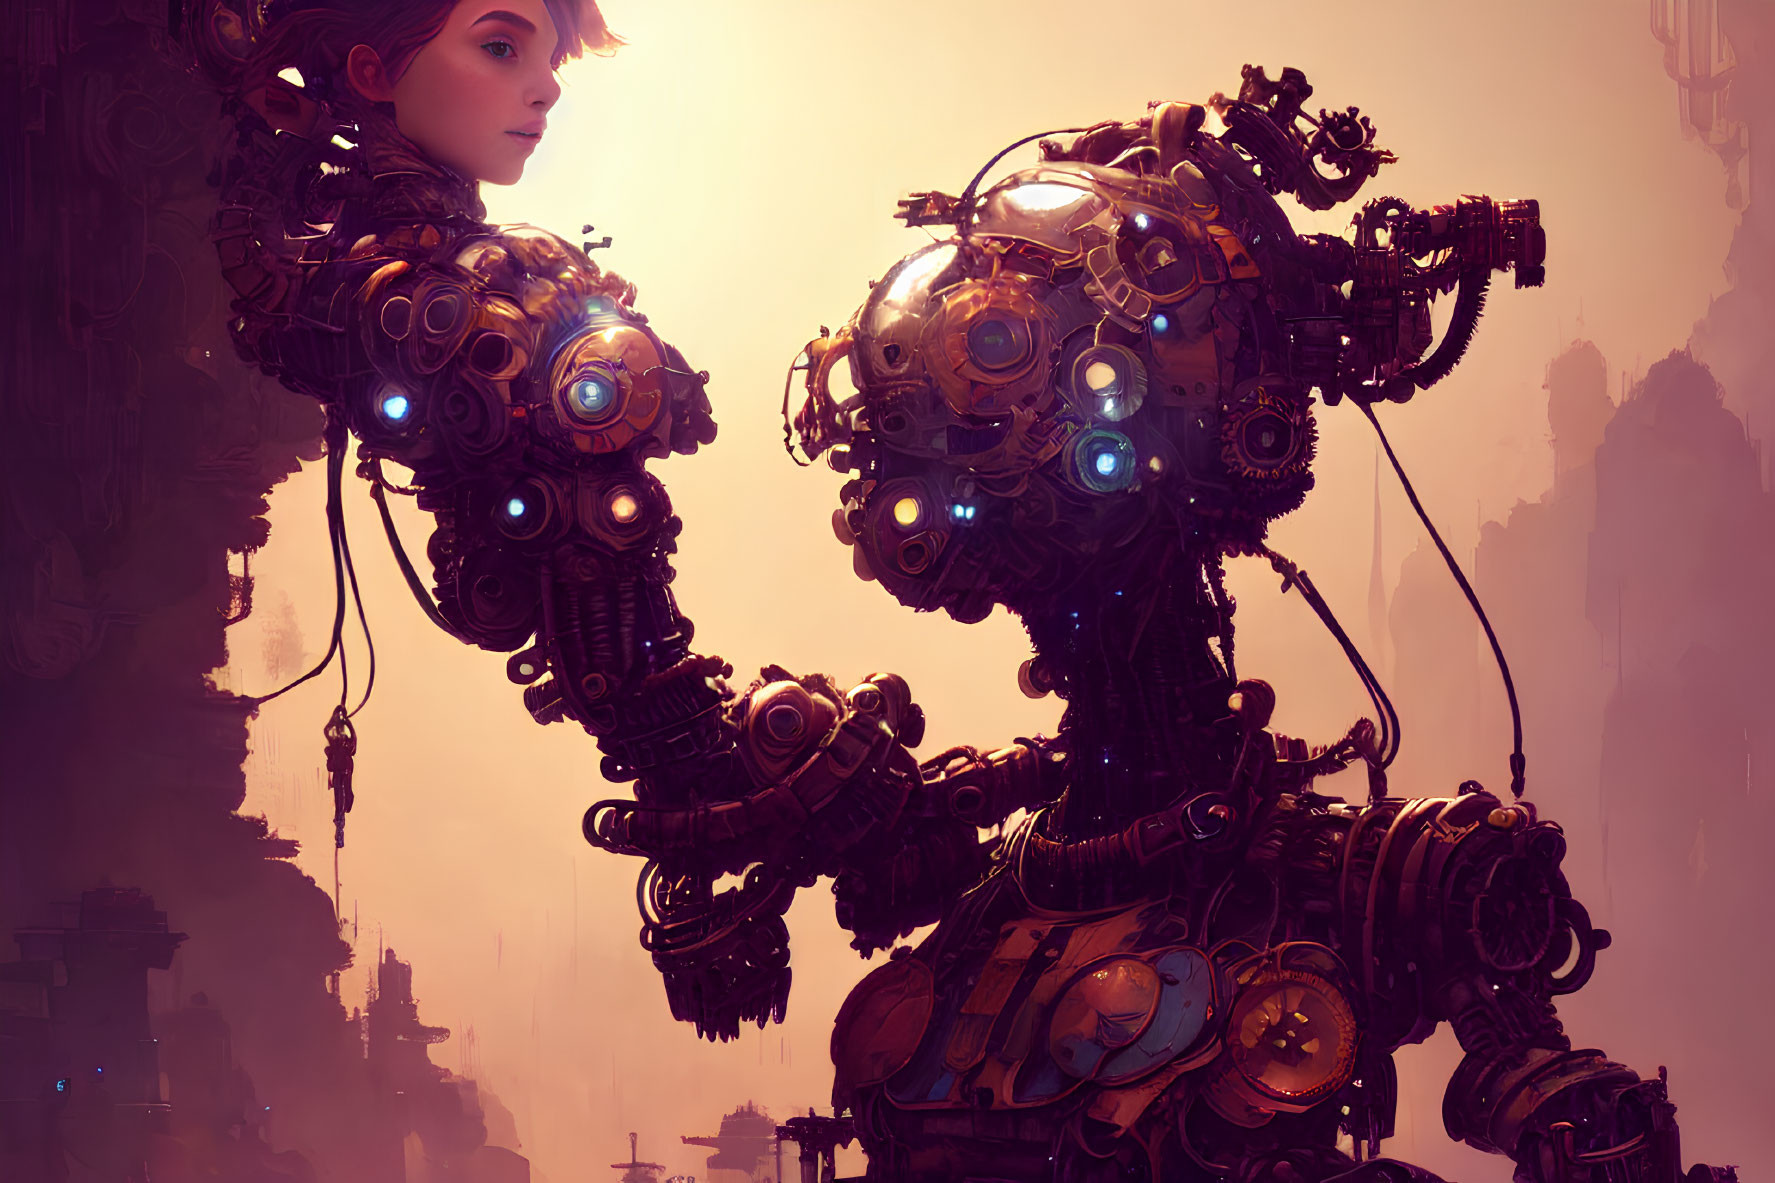 Confident woman next to intricate robot in futuristic cityscape